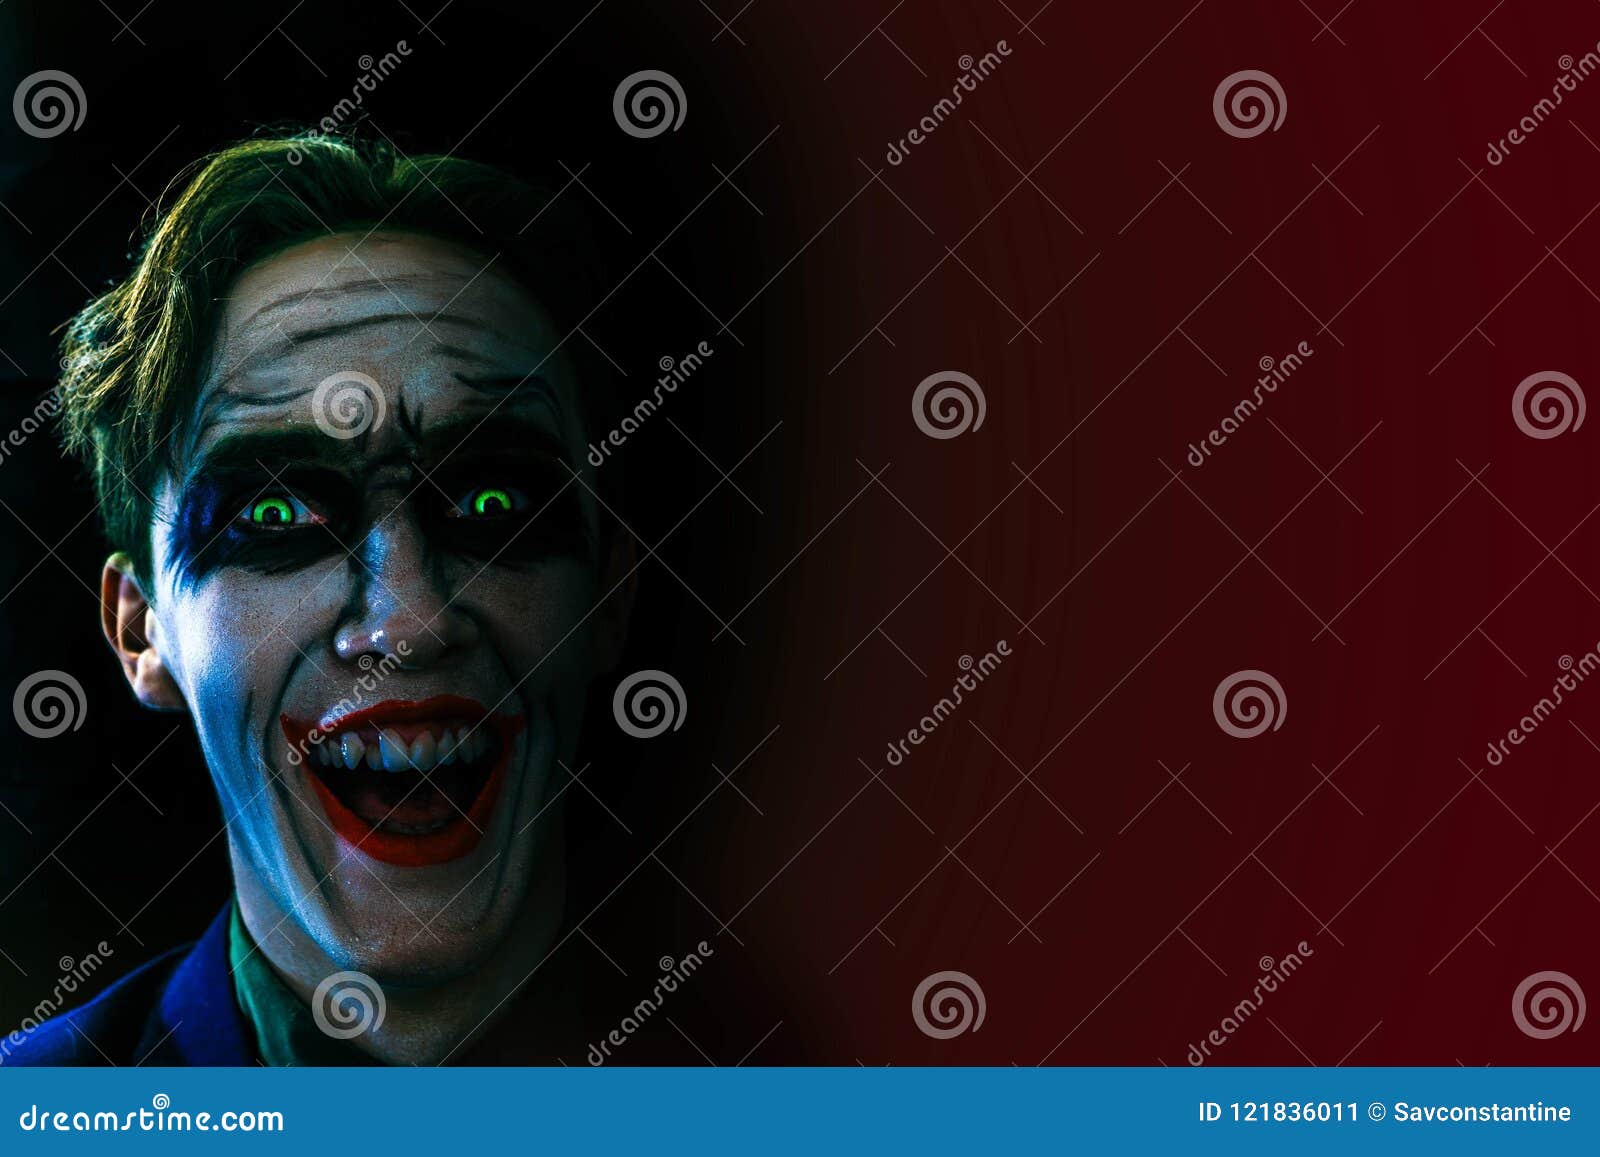 Crazy Joker. stock image. Image of green, eyes, expression - 121836011